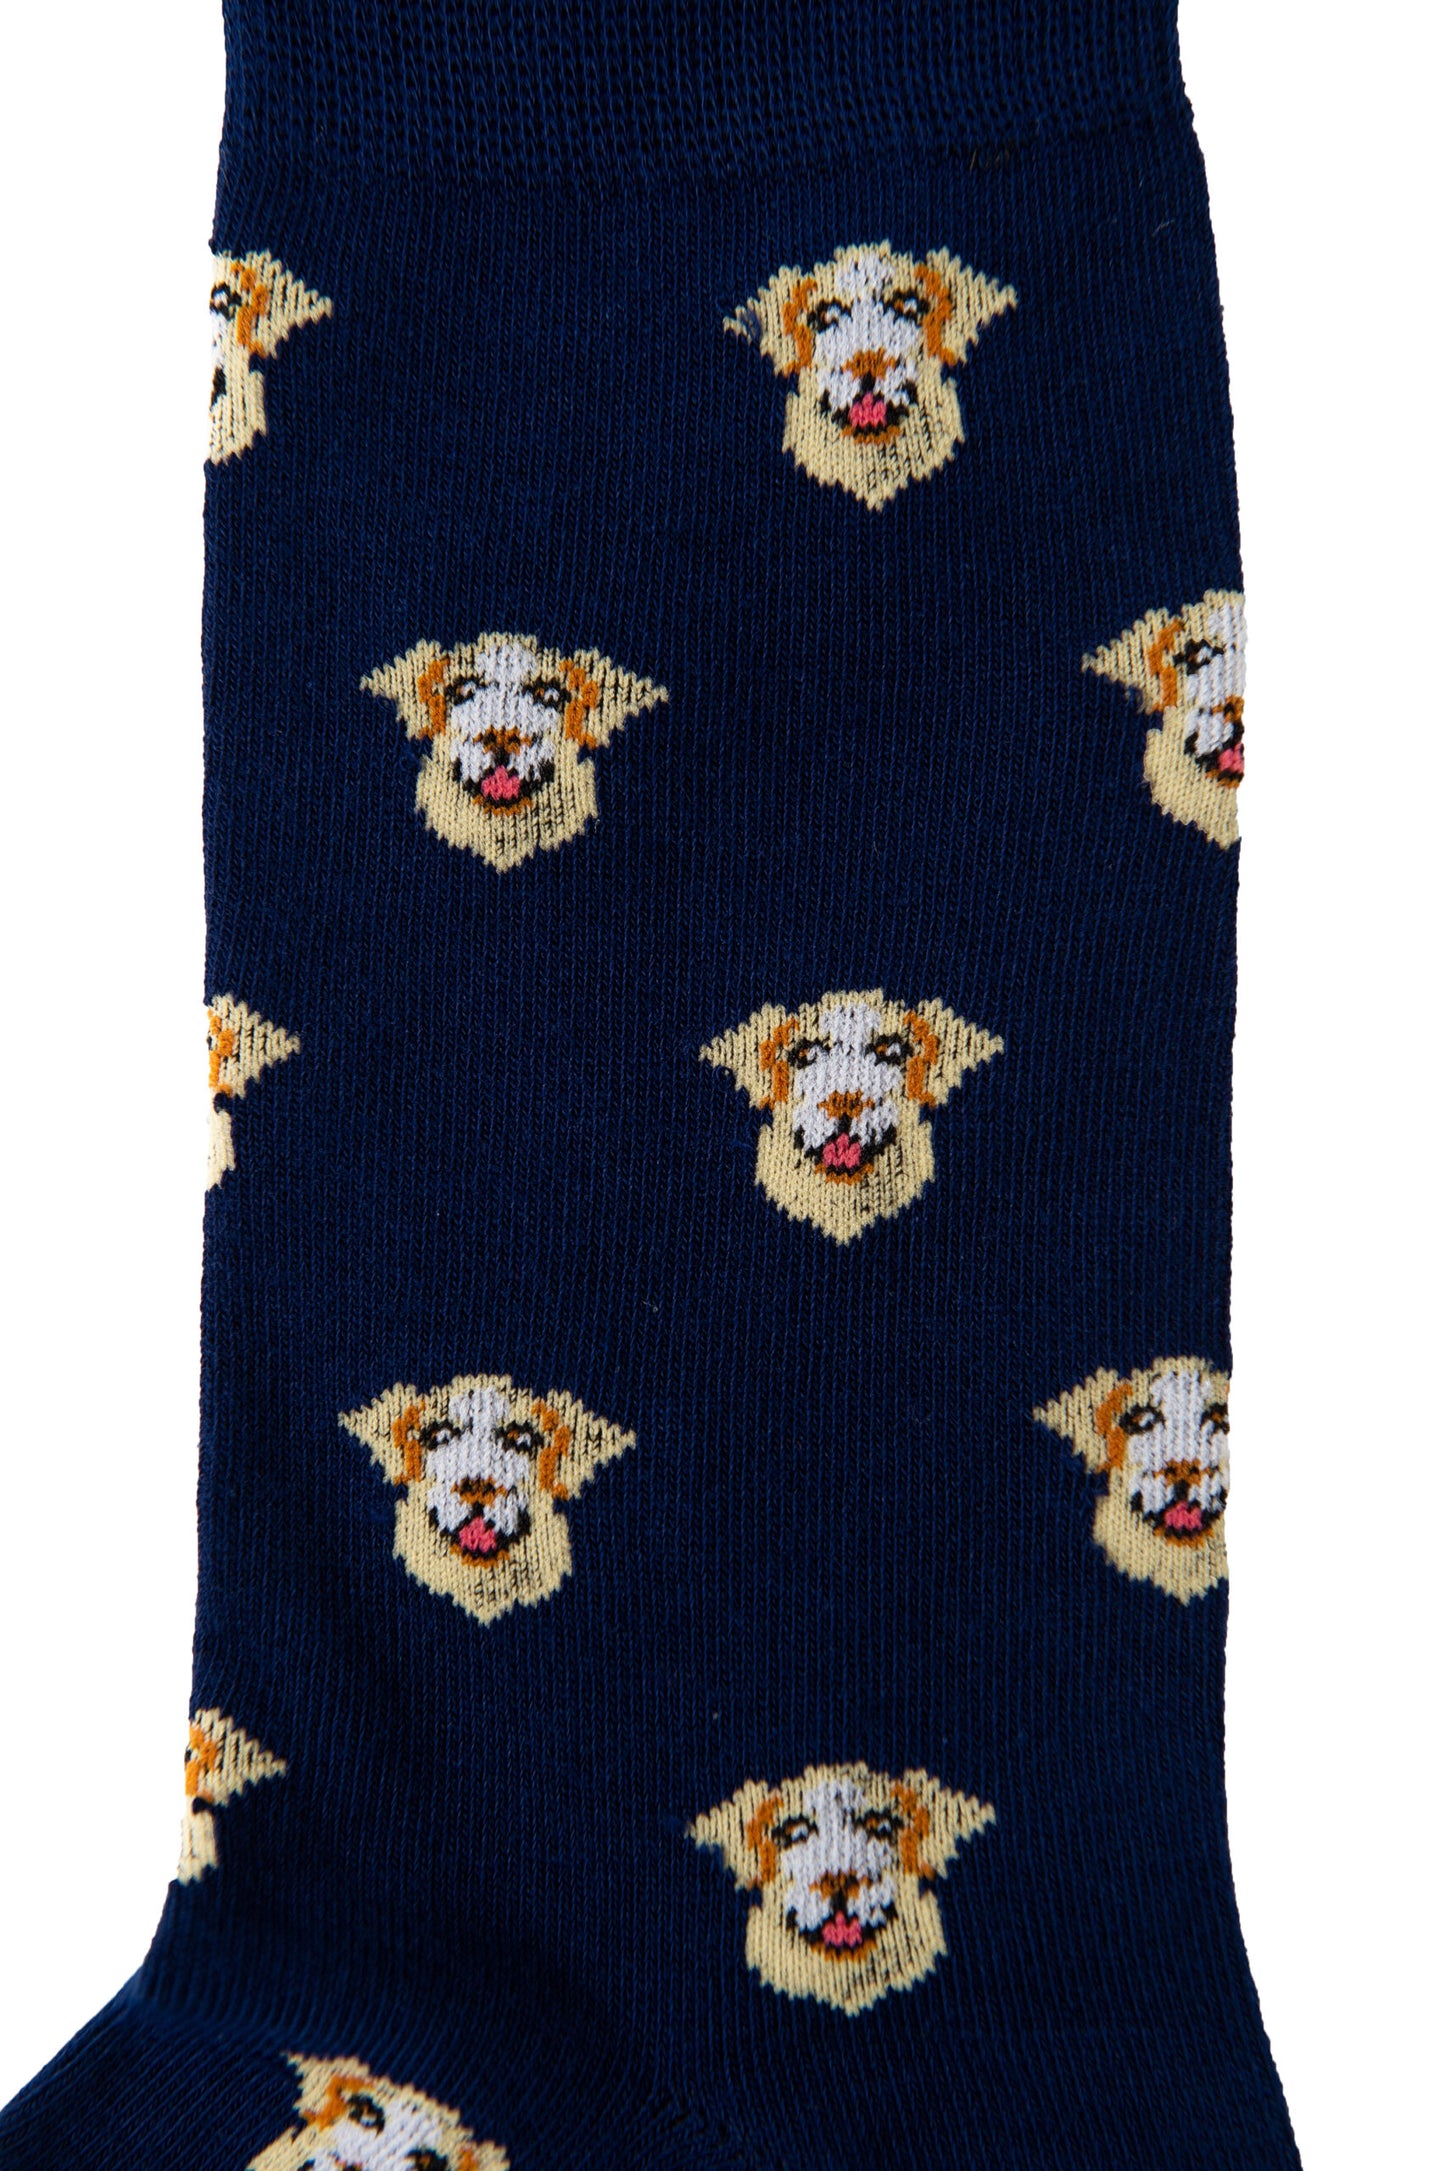 A pair of Labrador Dog Socks in navy.